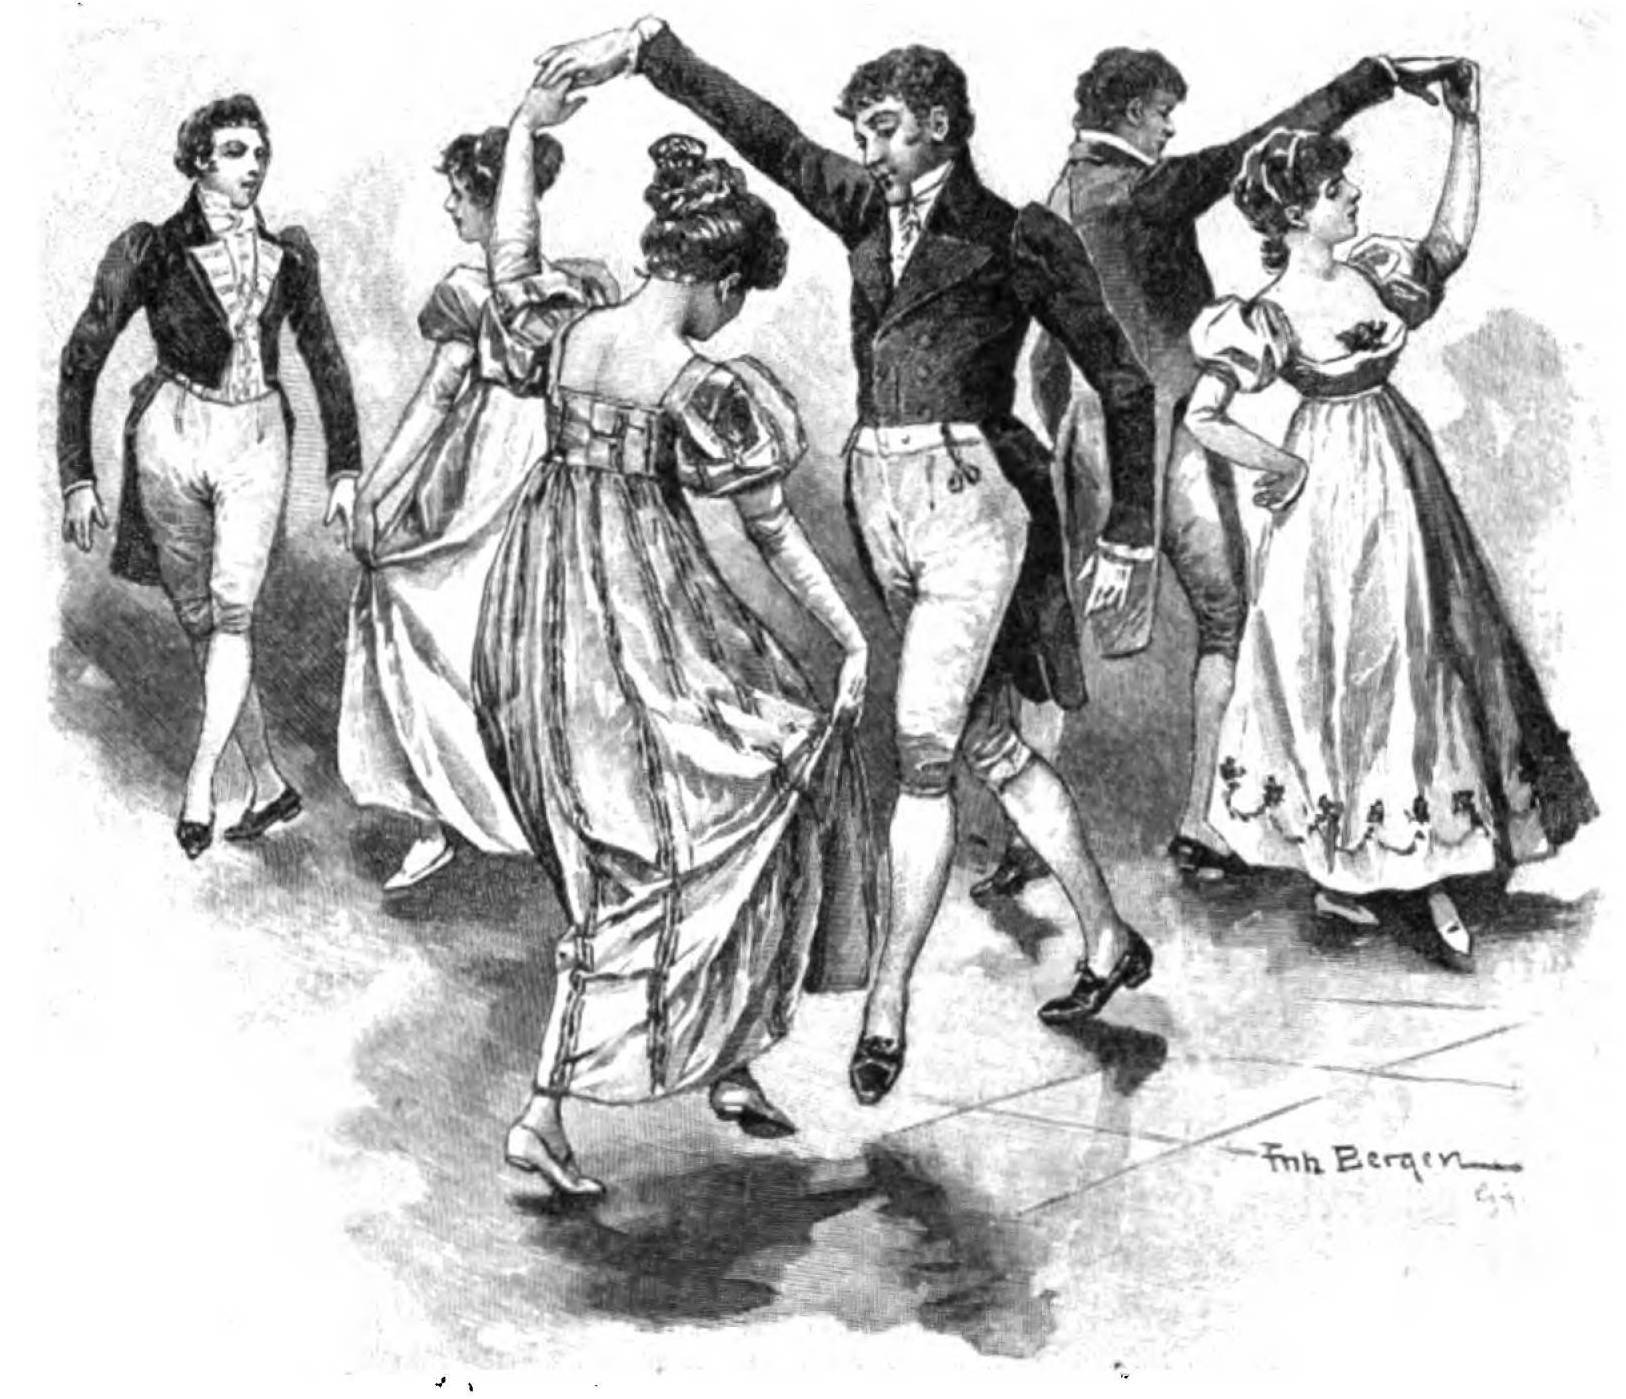 French dance. Французская кадриль 19 век. Танец мазурка рисунок. Полонез рисунок. Французская кадриль 19 века танец.